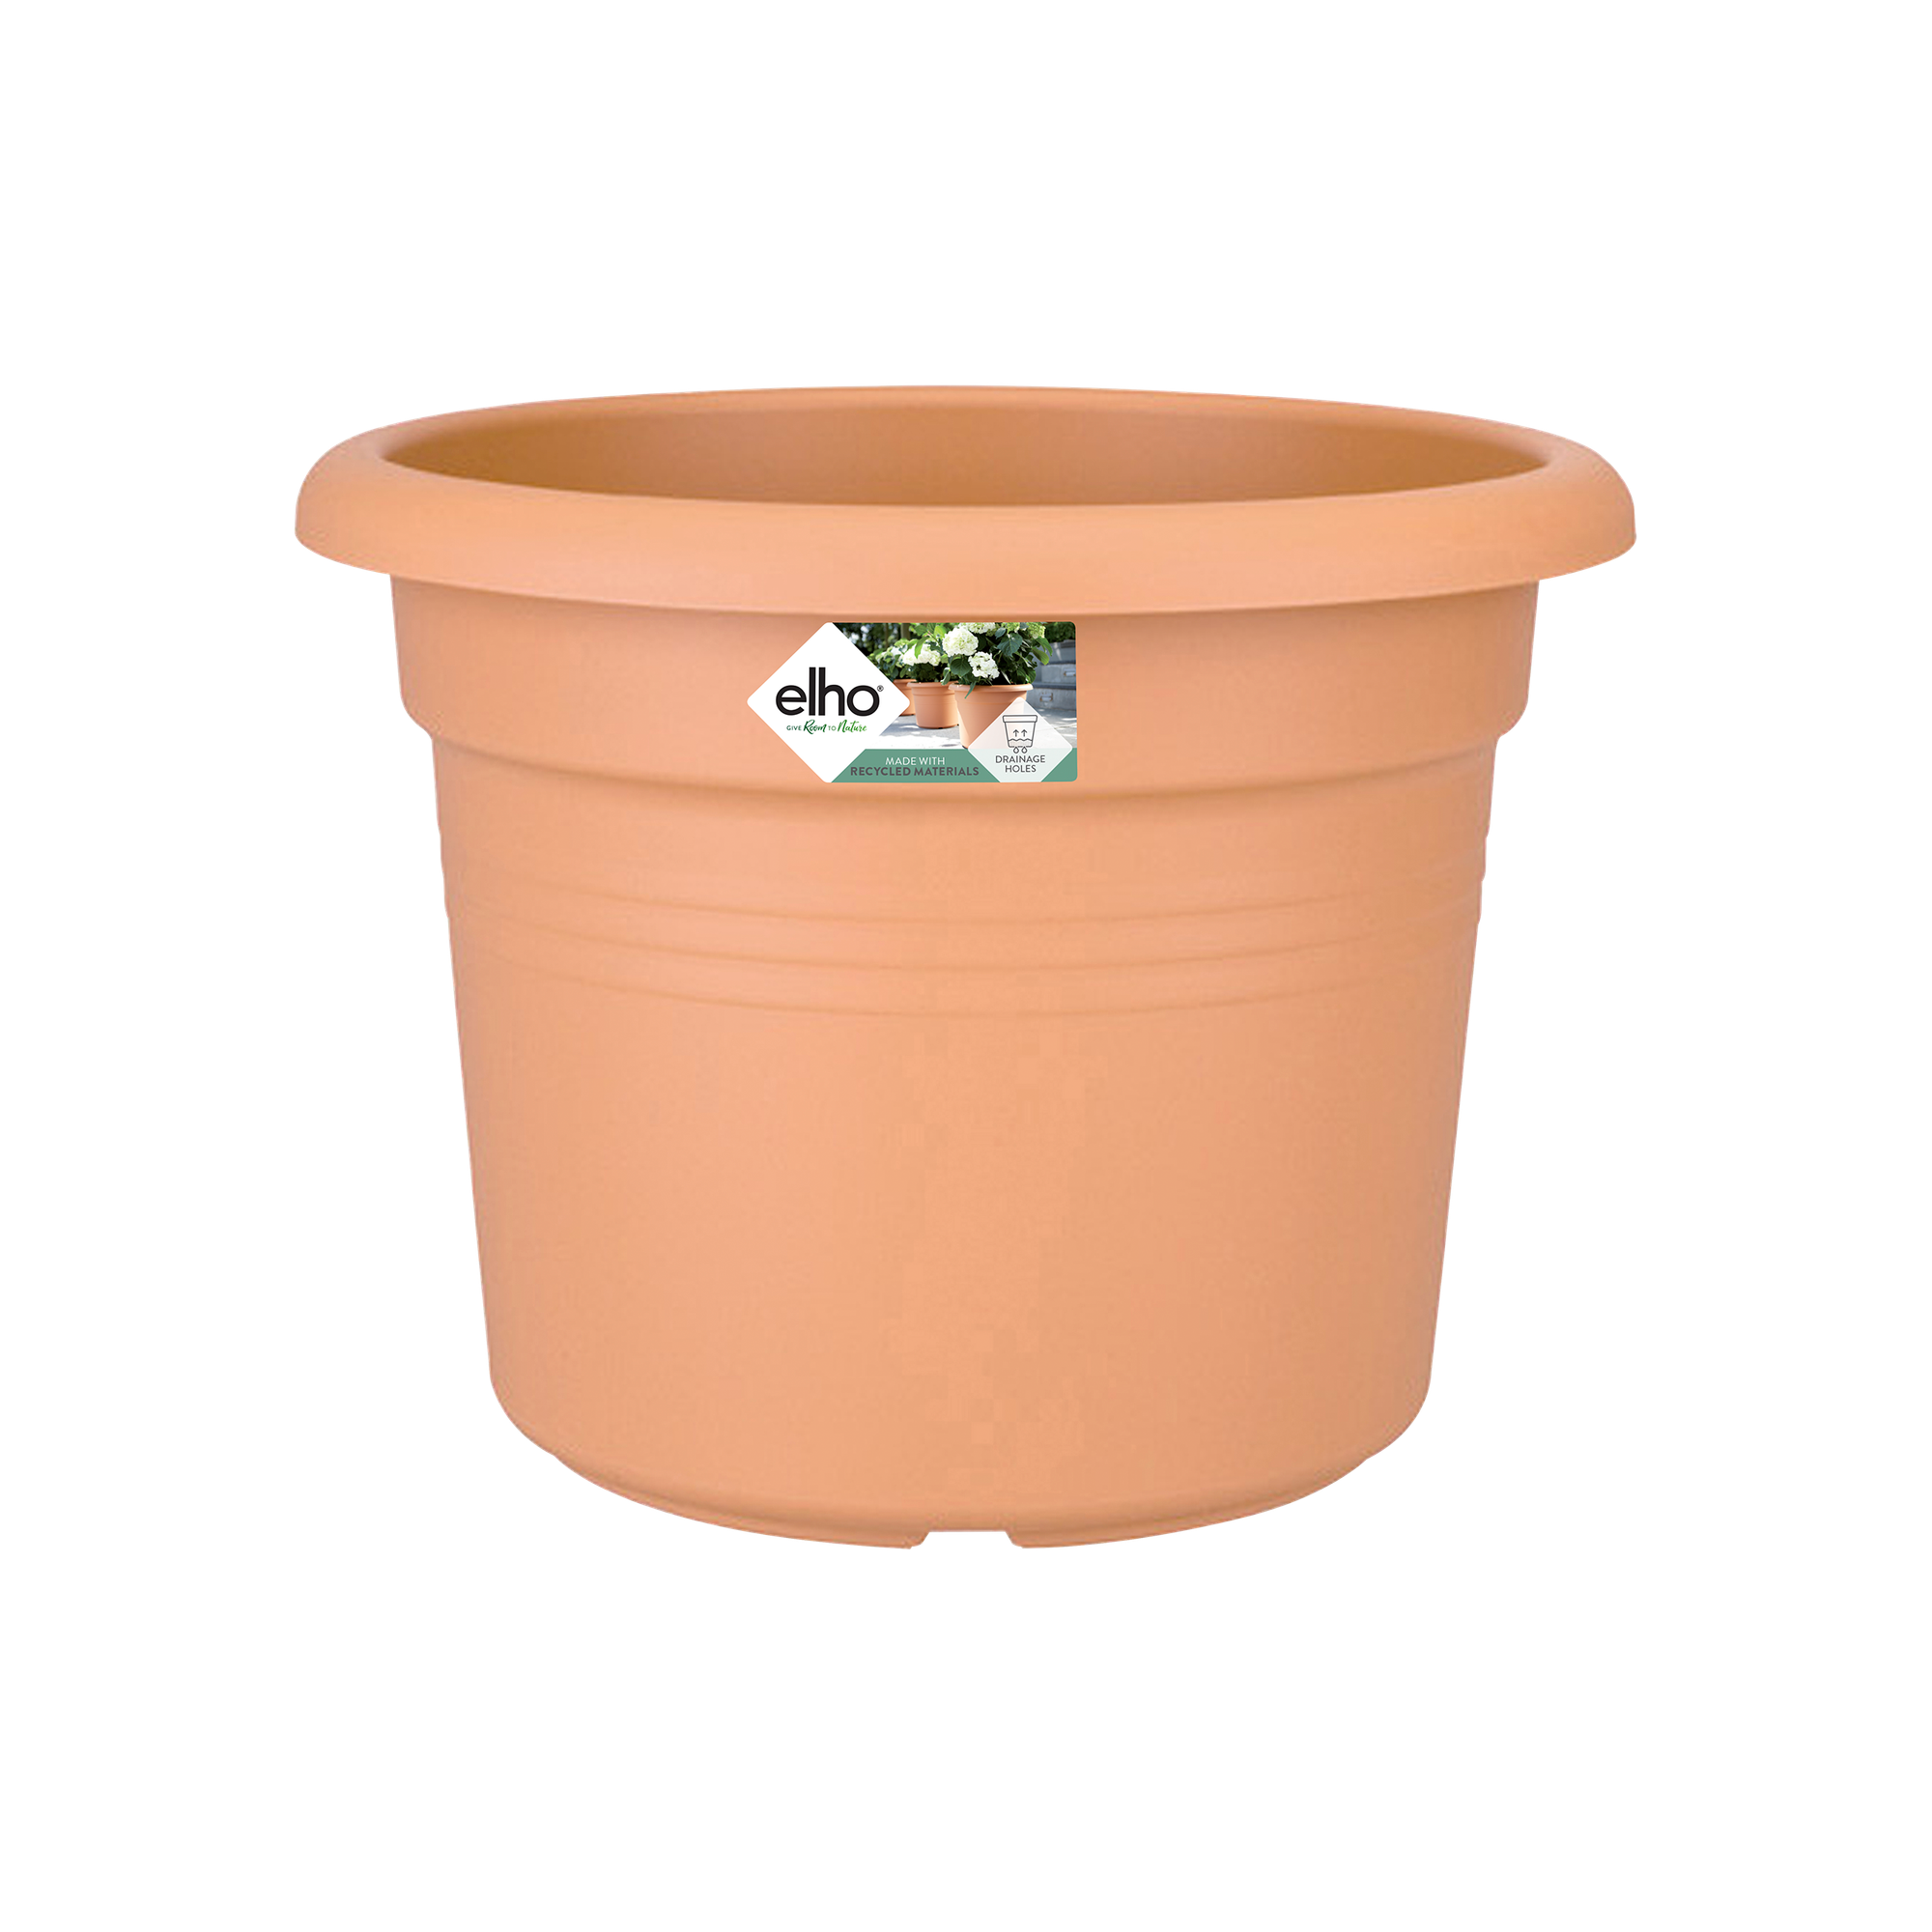 Elho Green Basics Cilinder Plant Pot Terracotta 40cm Recycled Stable 